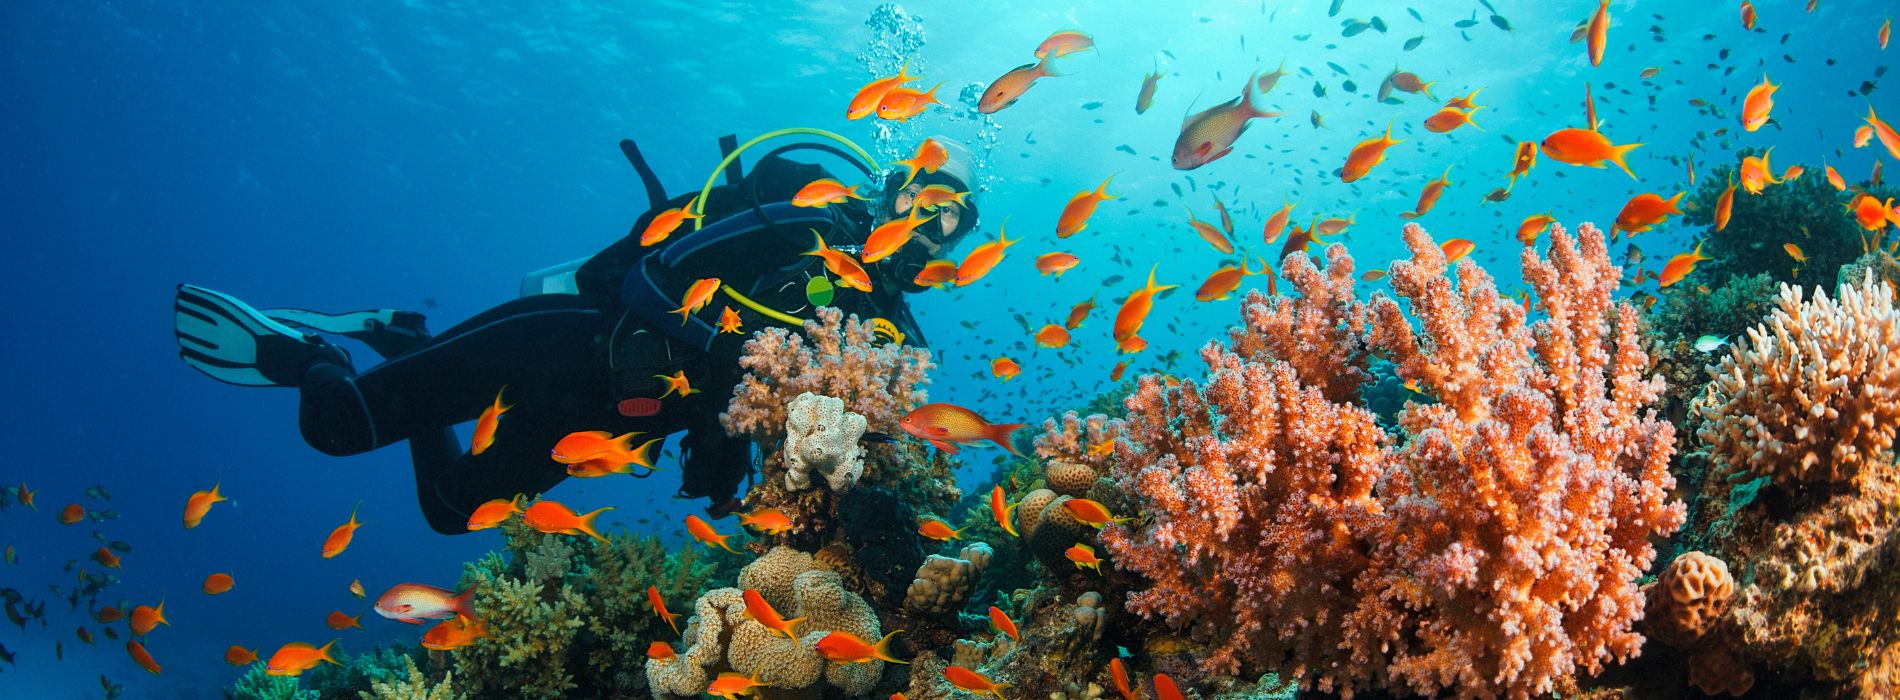 Best Places to Scuba Dive in Puerto Rico